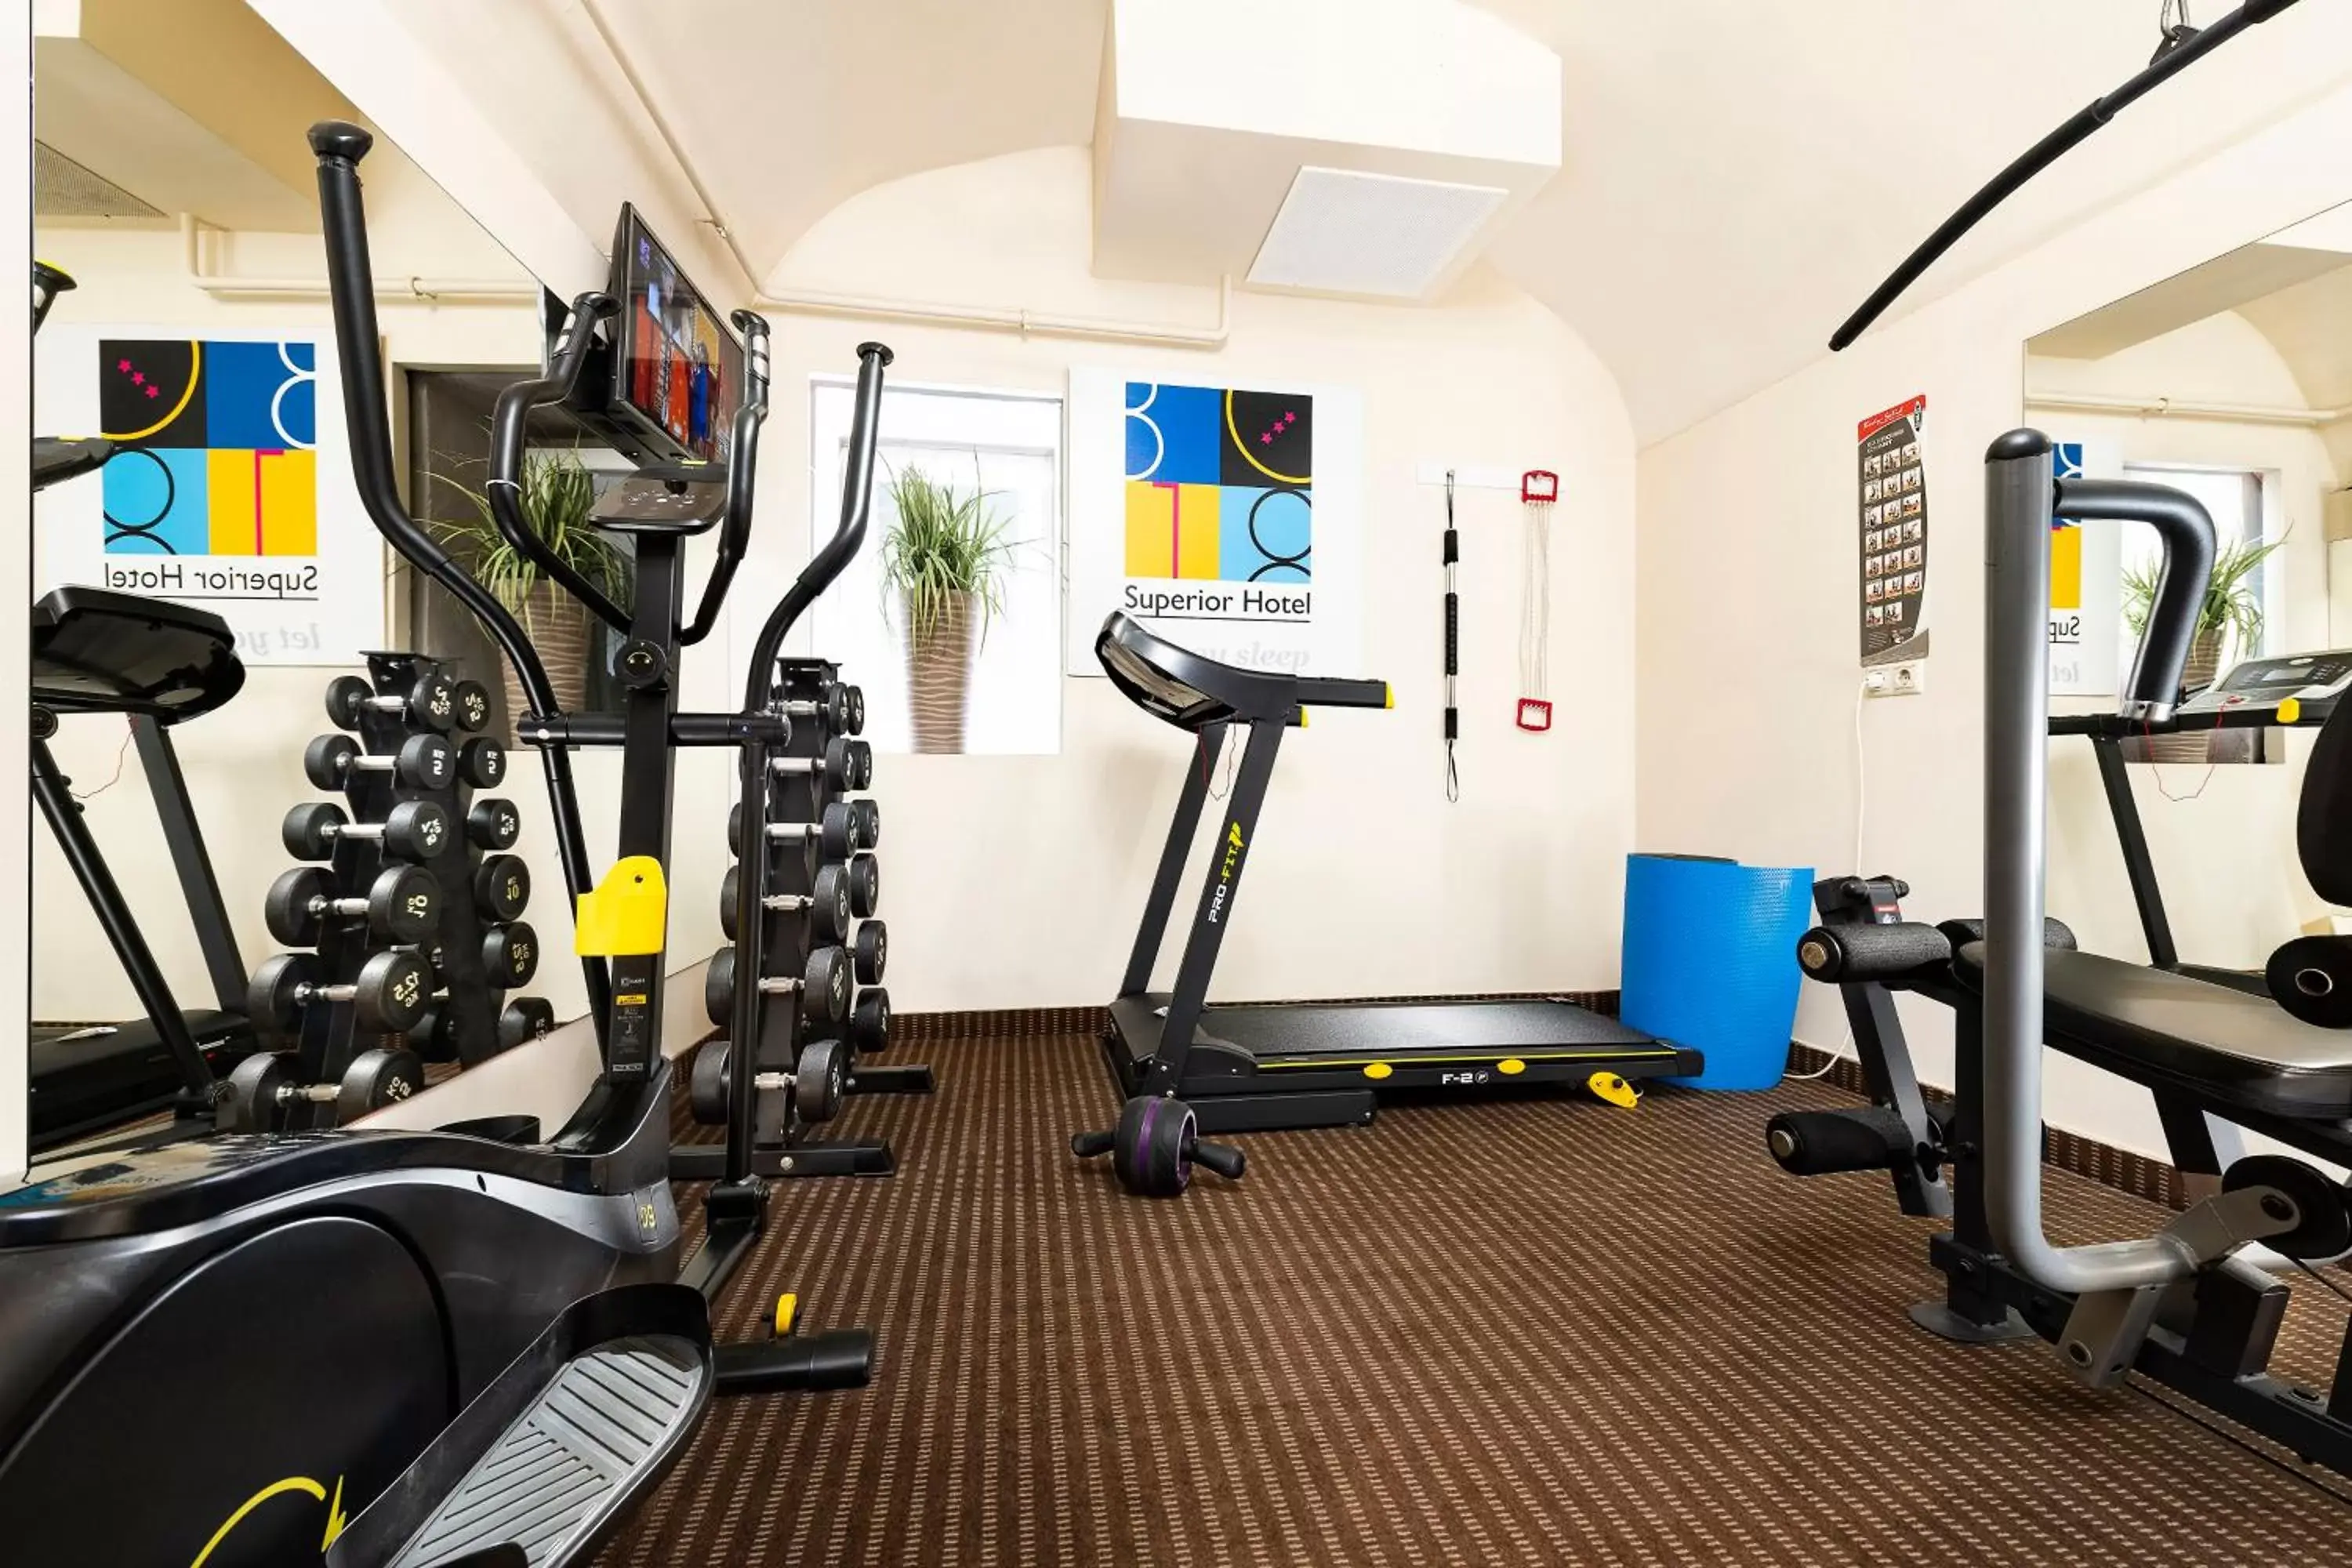 Fitness centre/facilities, Fitness Center/Facilities in Bo18 Hotel Superior